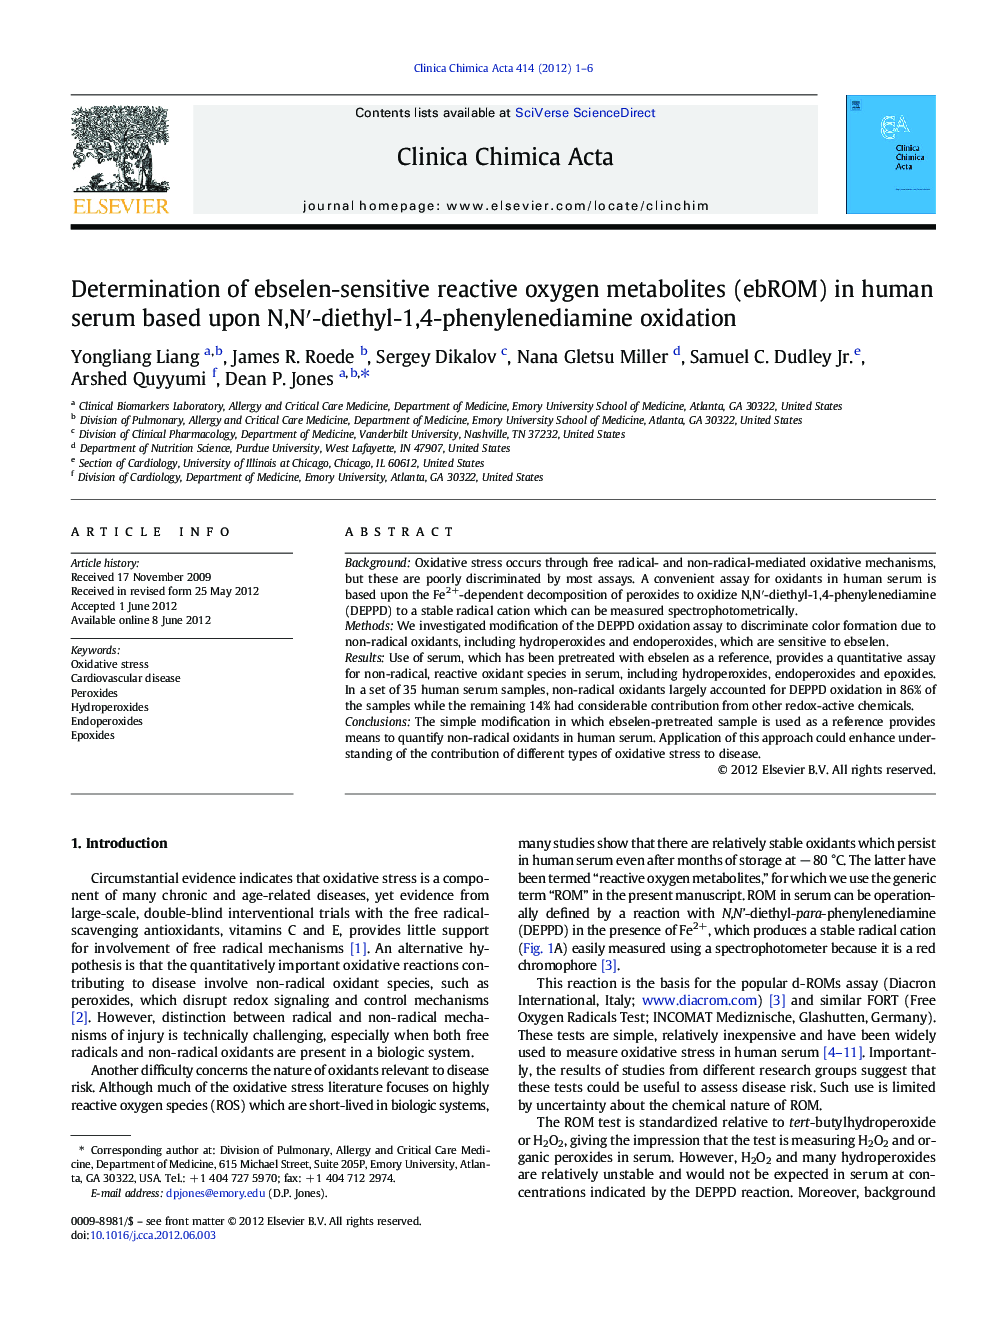 Determination of ebselen-sensitive reactive oxygen metabolites (ebROM) in human serum based upon N,Nâ²-diethyl-1,4-phenylenediamine oxidation